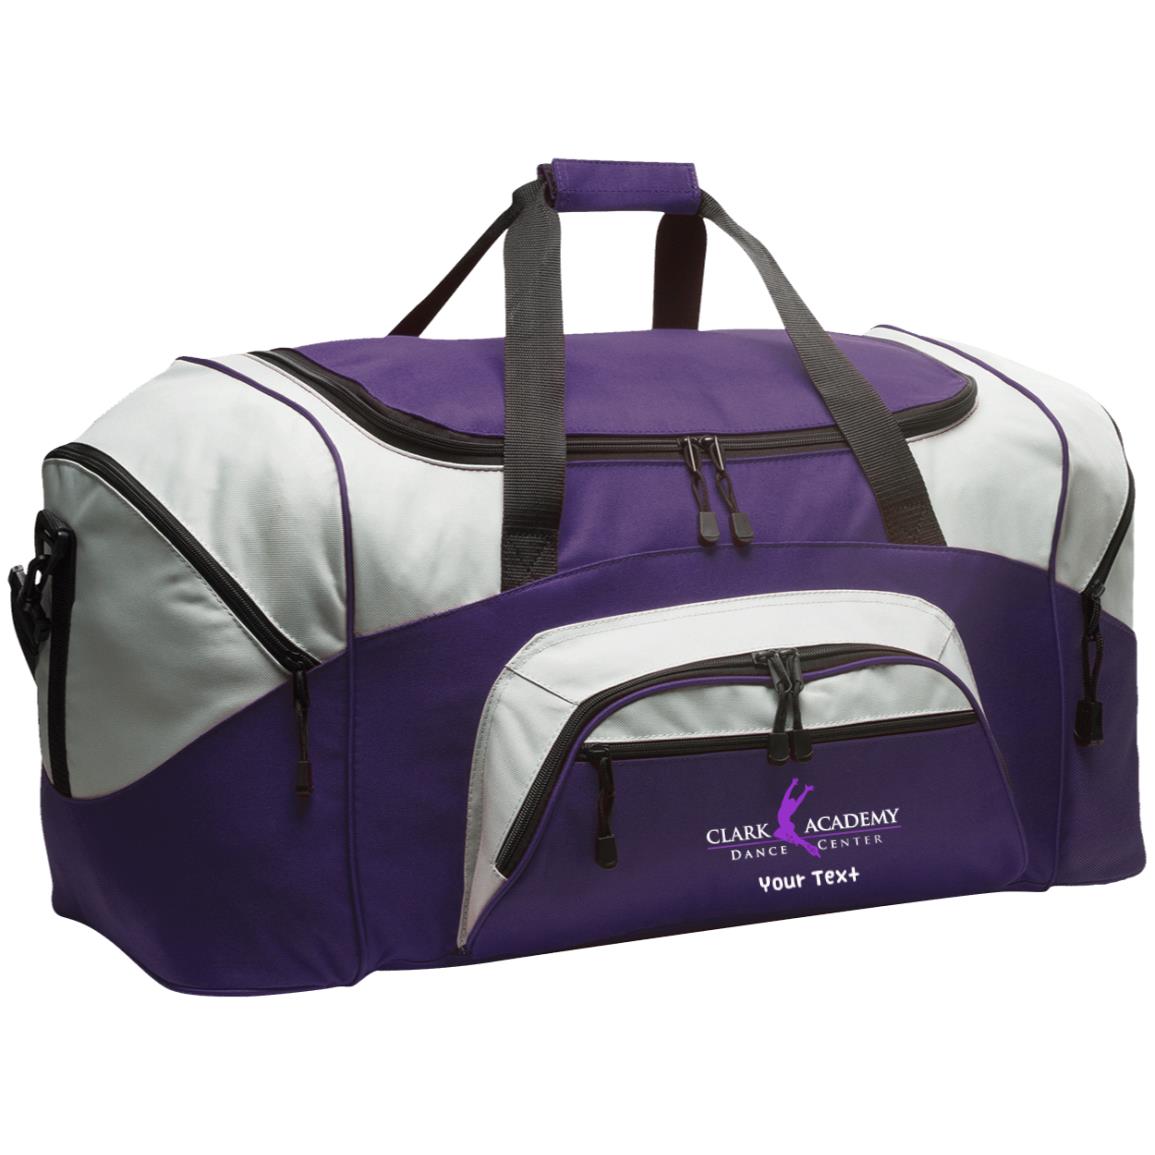 CADC Large Duffel Bag - Free Personalization